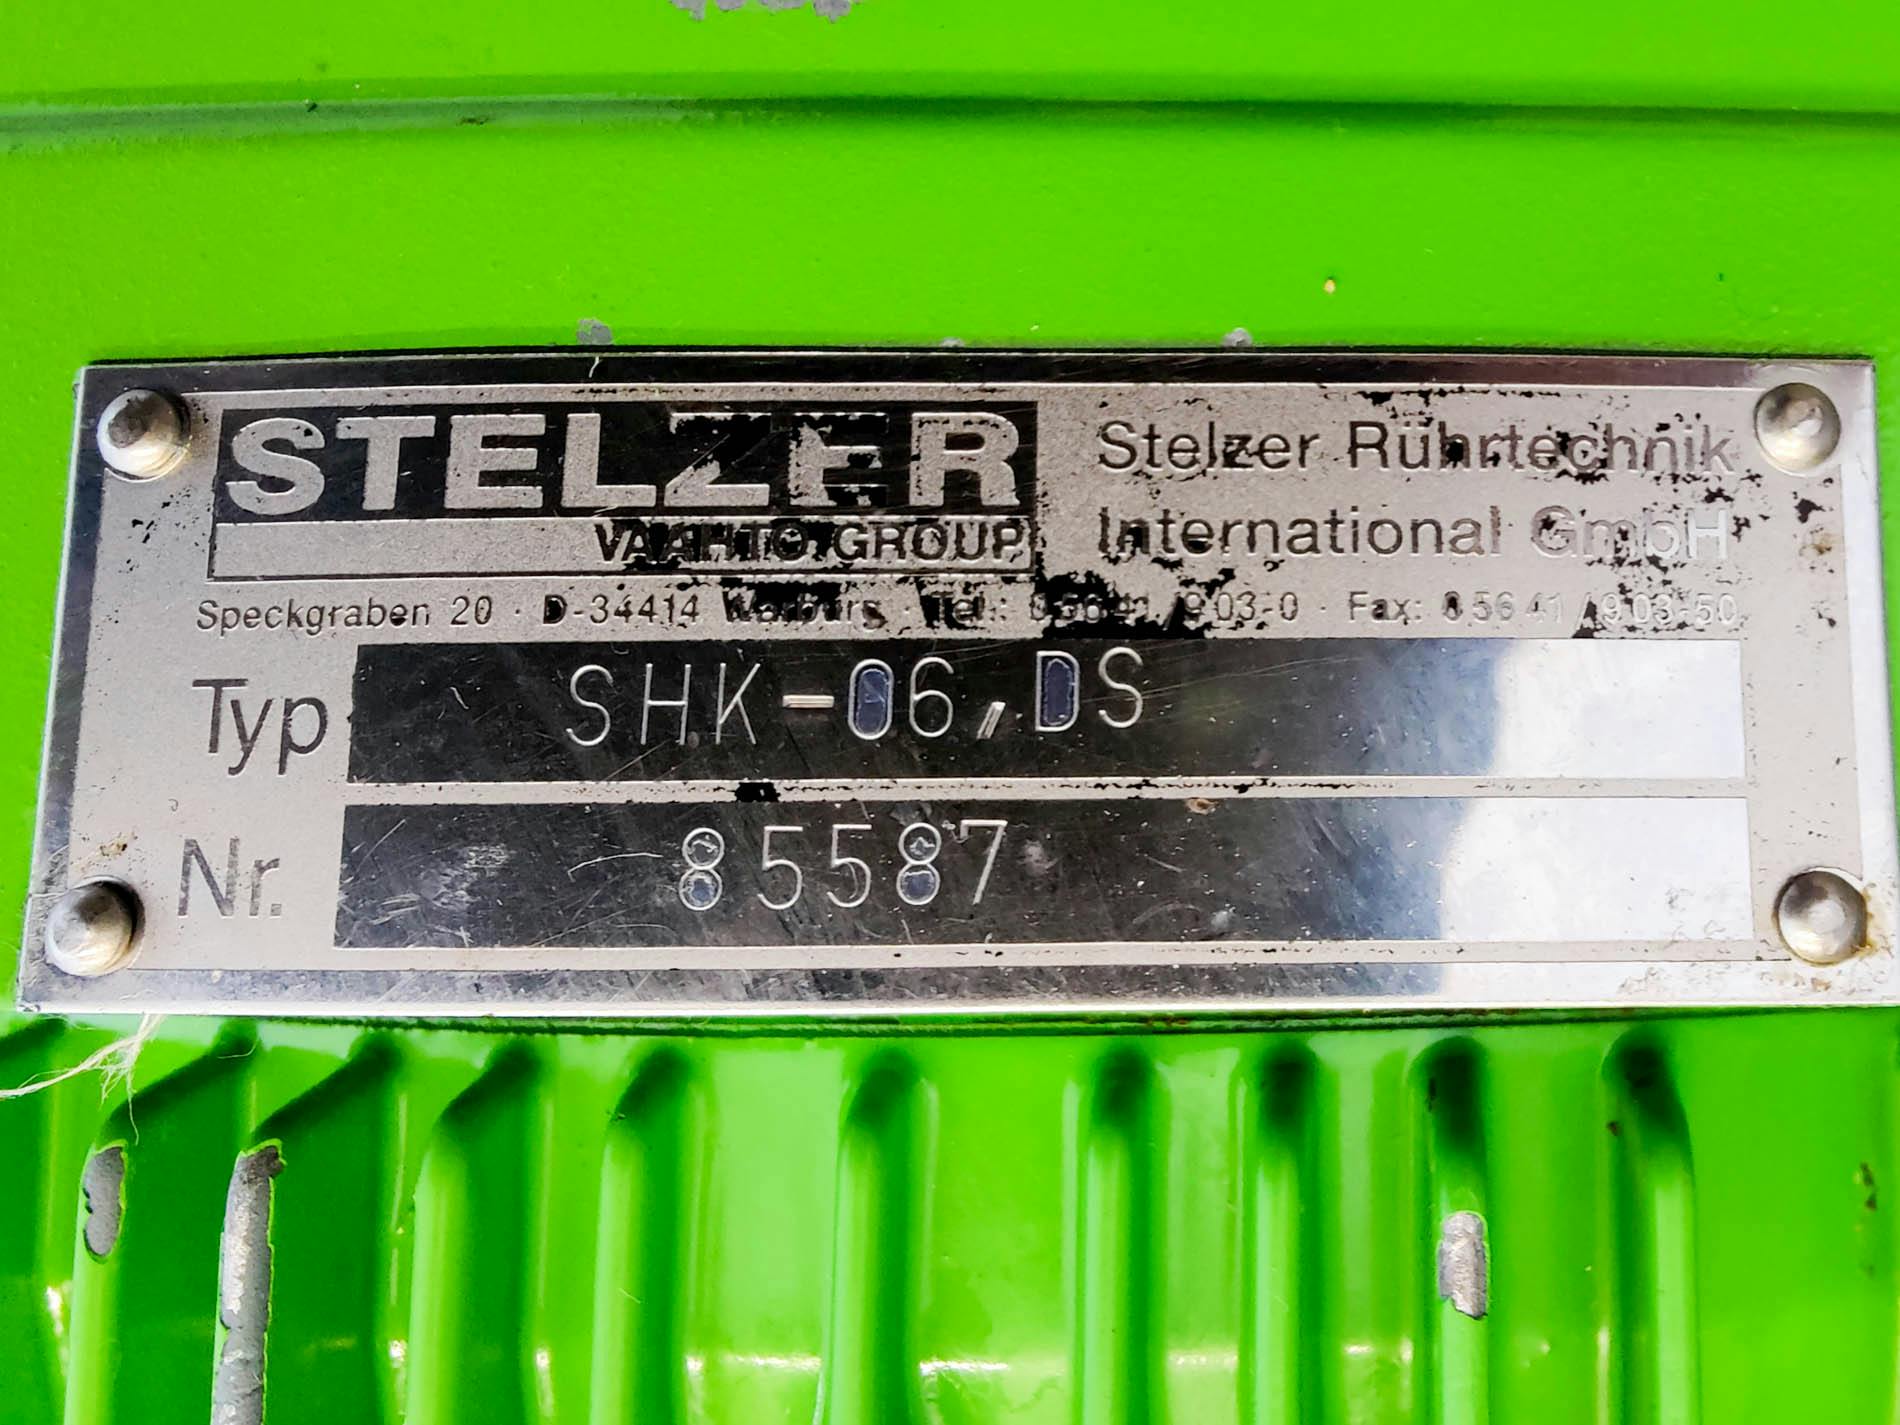 STC Engineering Stapelbehälter 6500 Ltr. - Zbiornik mieszalnikowy - image 6